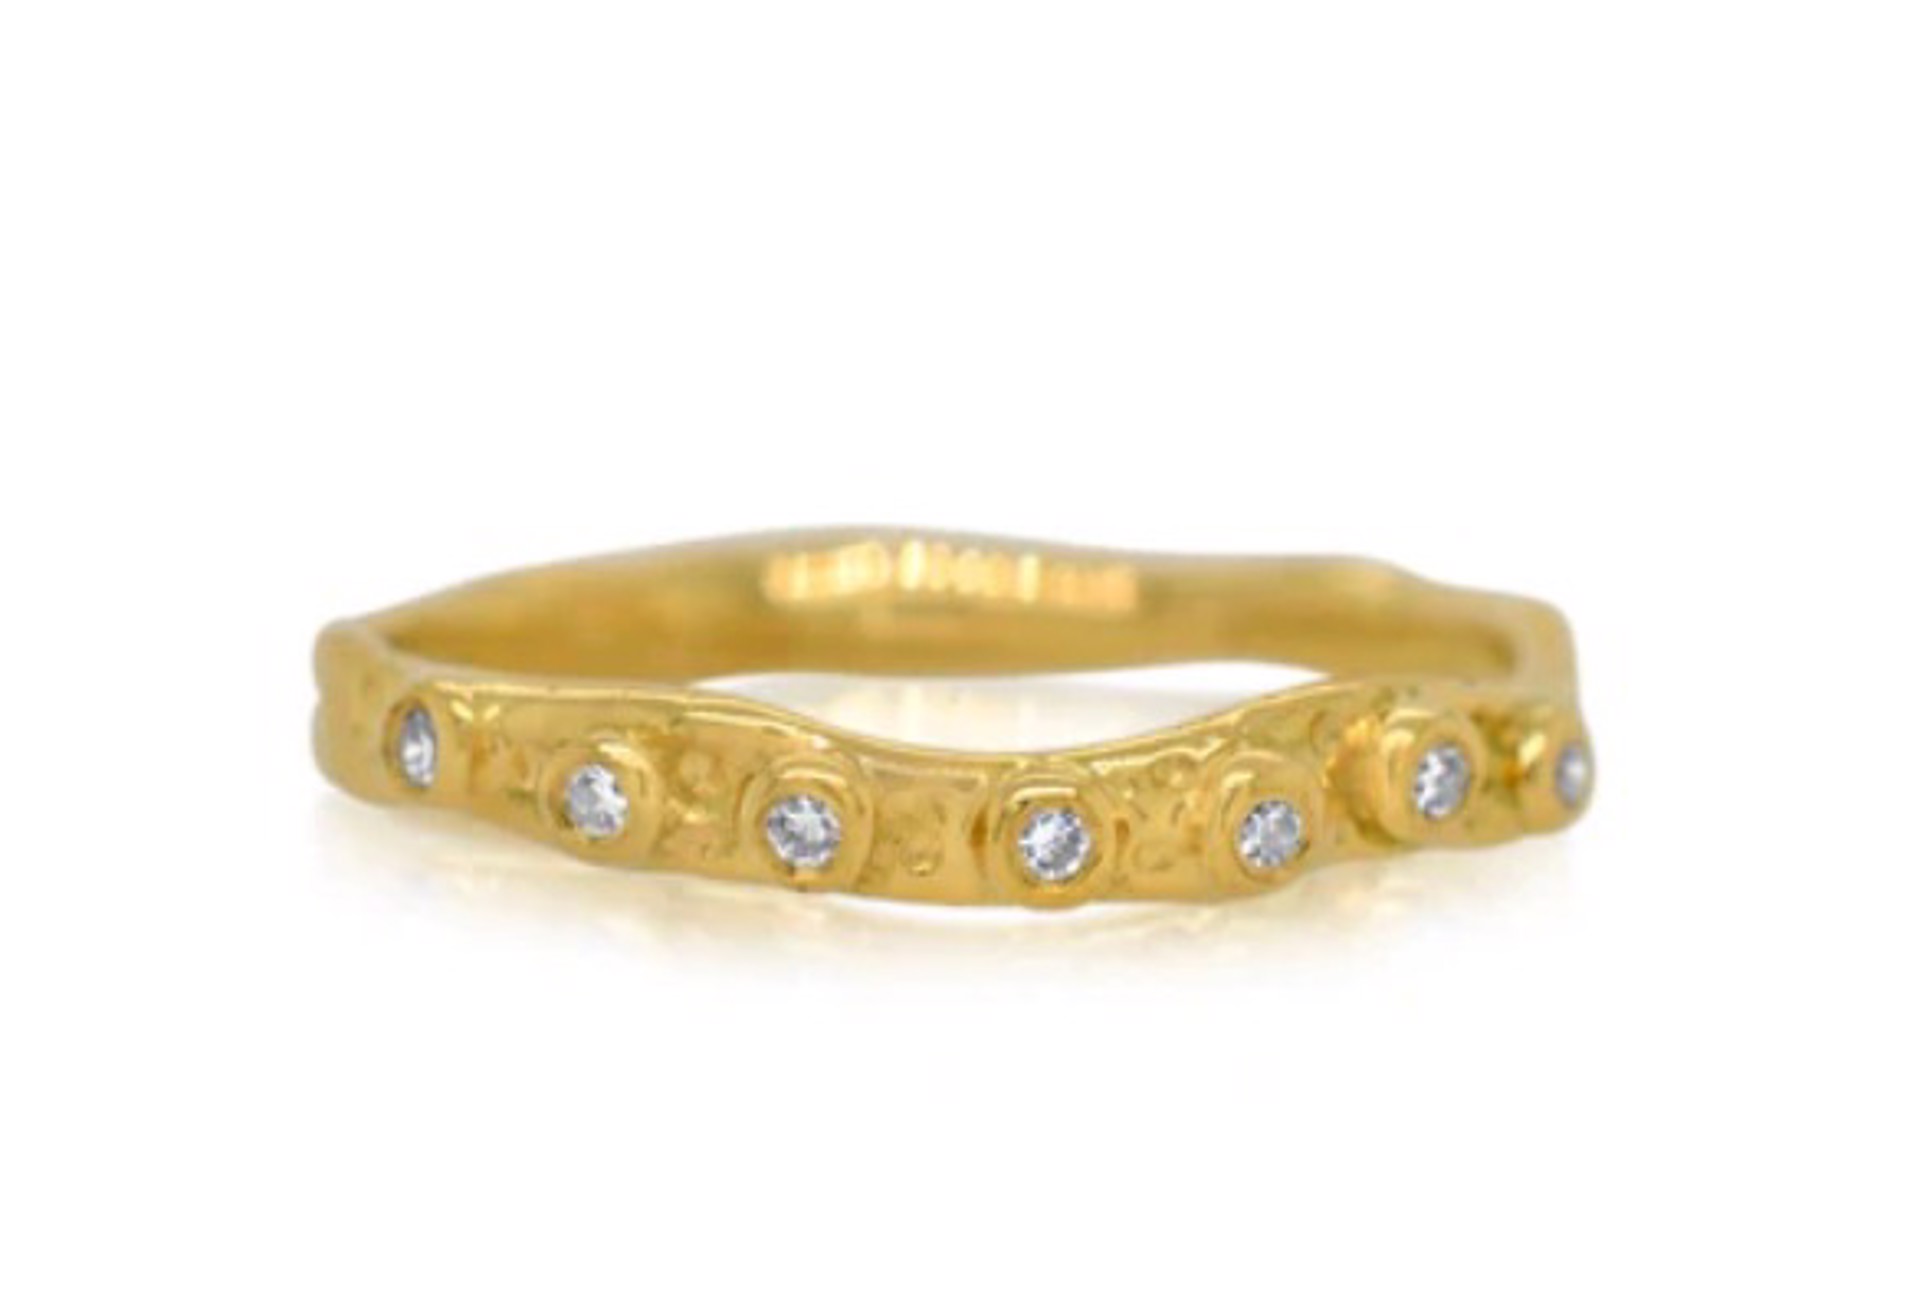 Dandelion Meadow- 18k gold and diamond ring by Kristen Baird